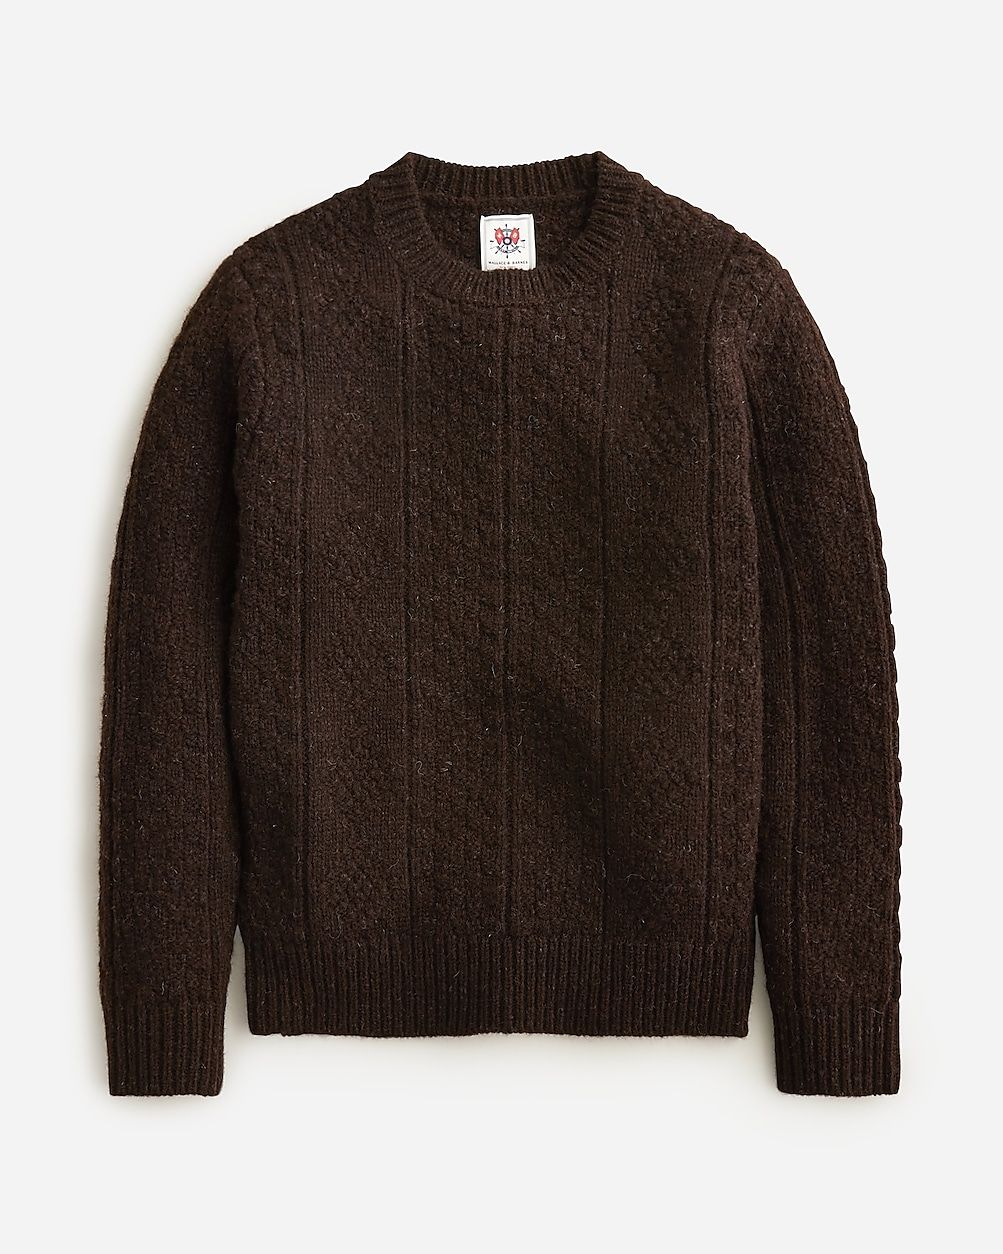 Wallace & Barnes guernsey stitch wool sweater | J.Crew US